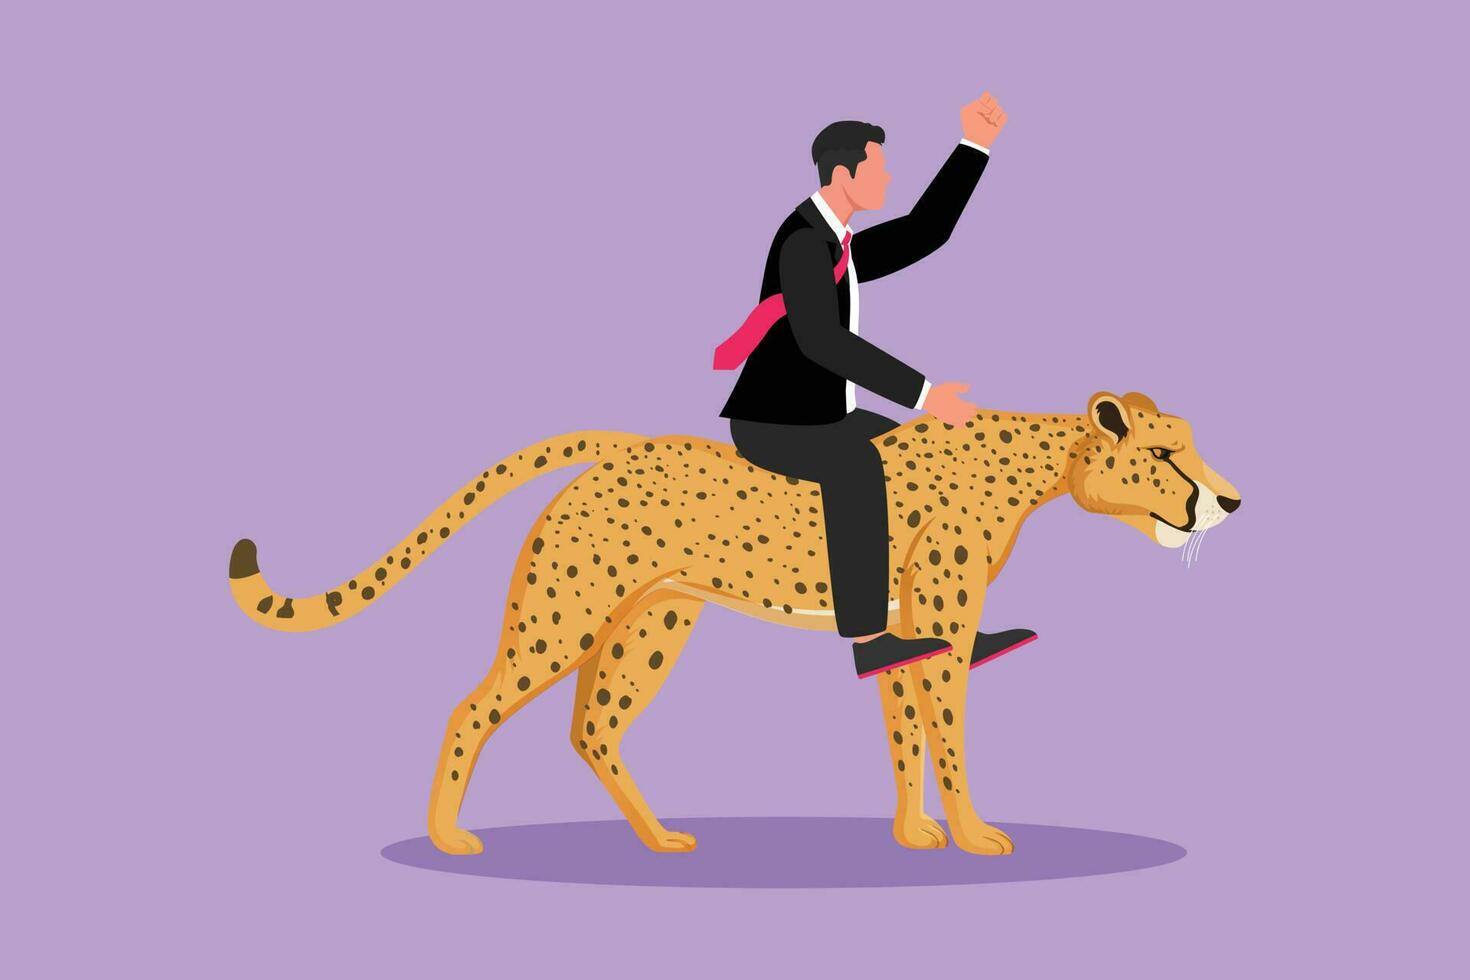 Character flat drawing of young businessman riding cheetah symbol of success. Business metaphor, looking at goal, achievement, leadership. Professional entrepreneur. Cartoon design vector illustration